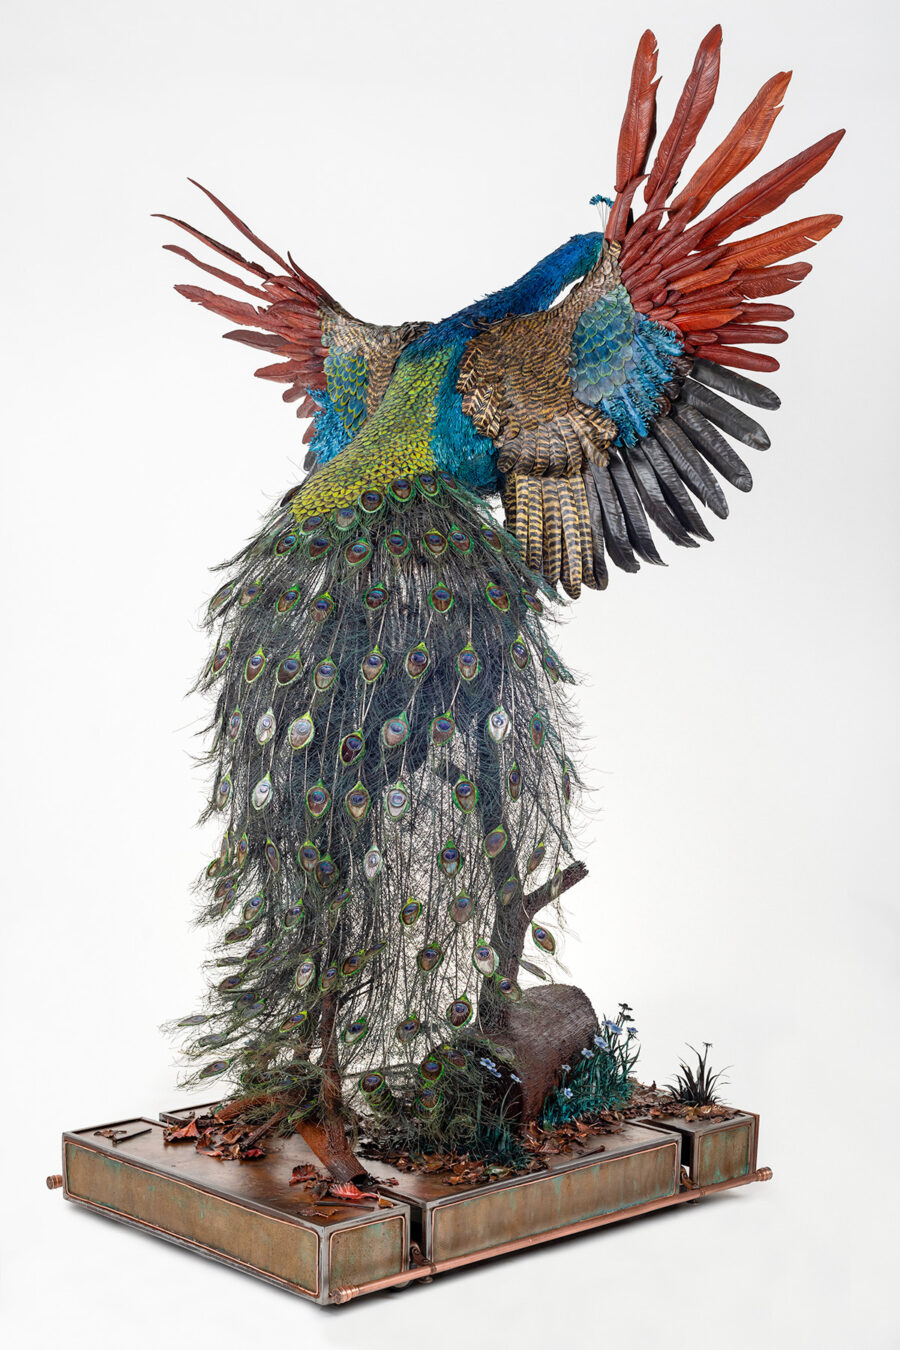 Peacock Sculpture by Cindy Chinn - 12